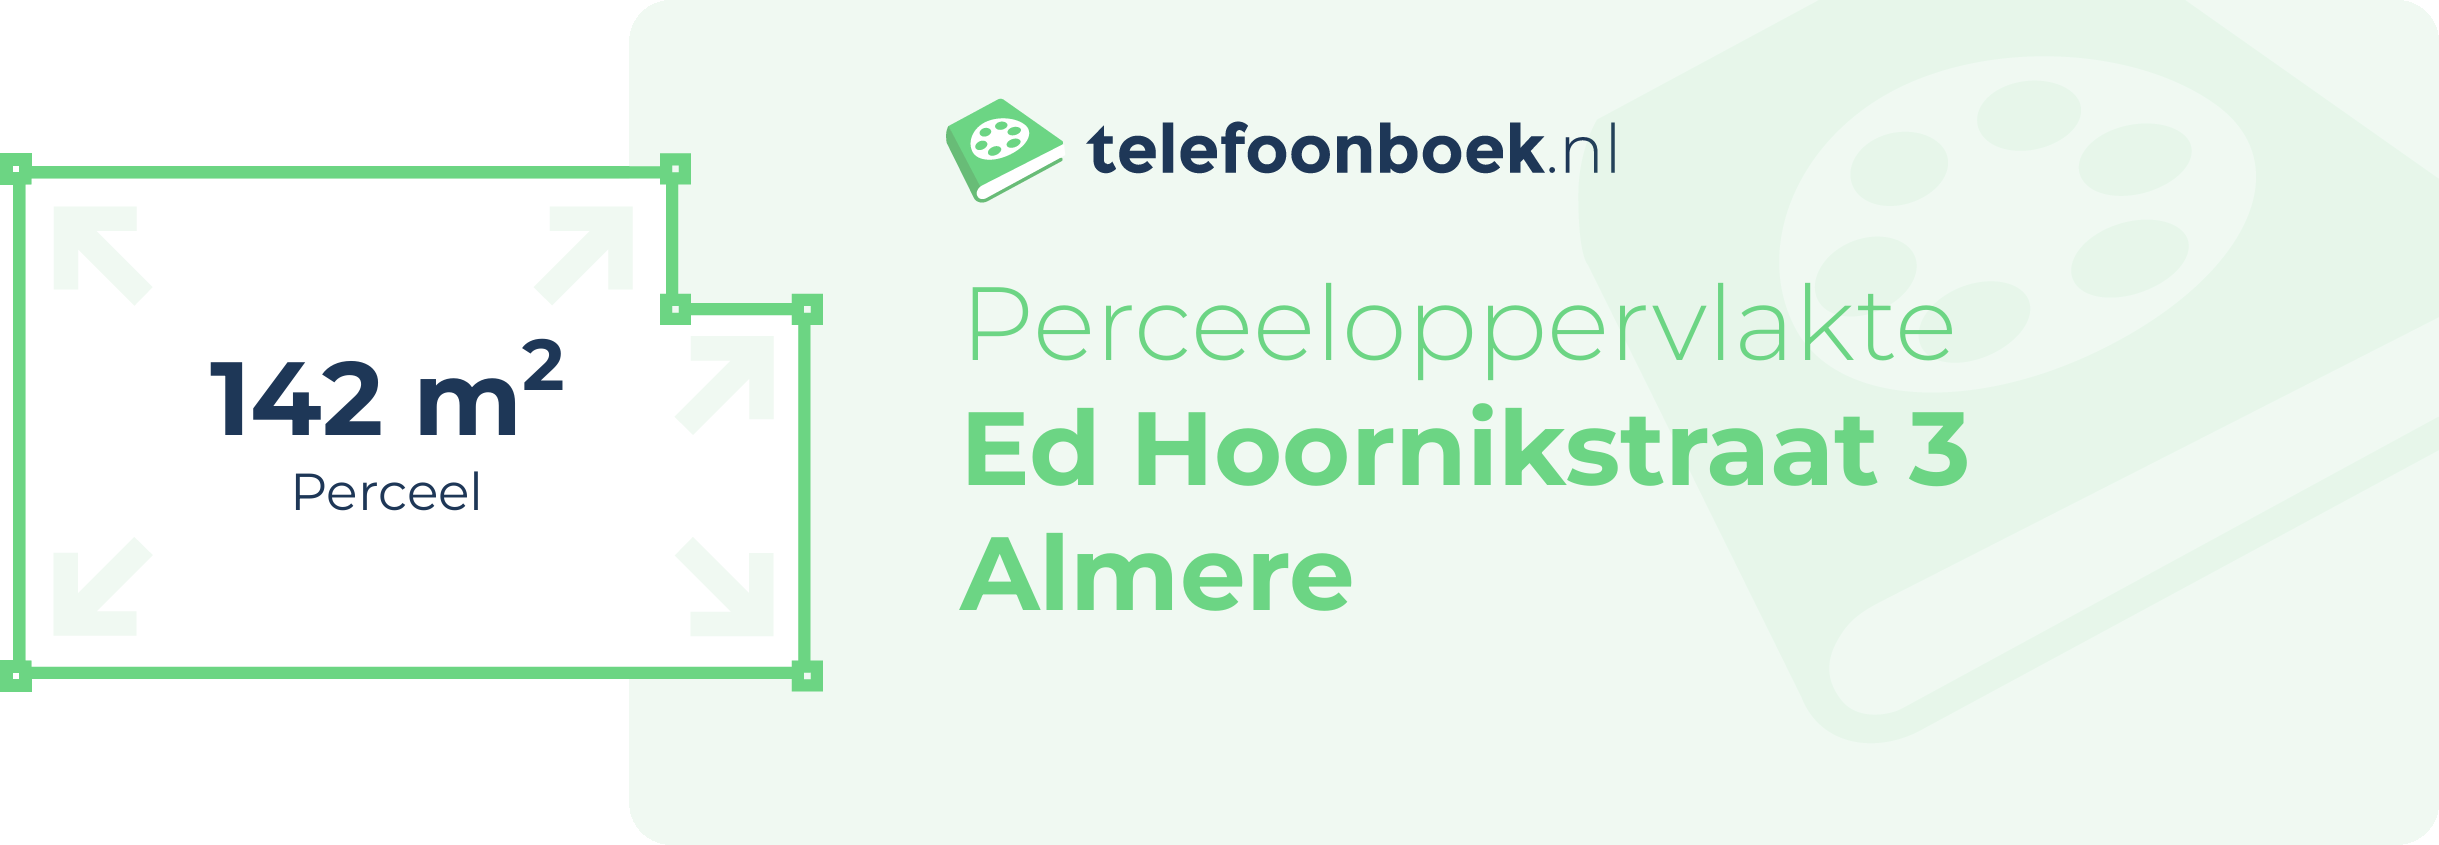 Perceeloppervlakte Ed Hoornikstraat 3 Almere